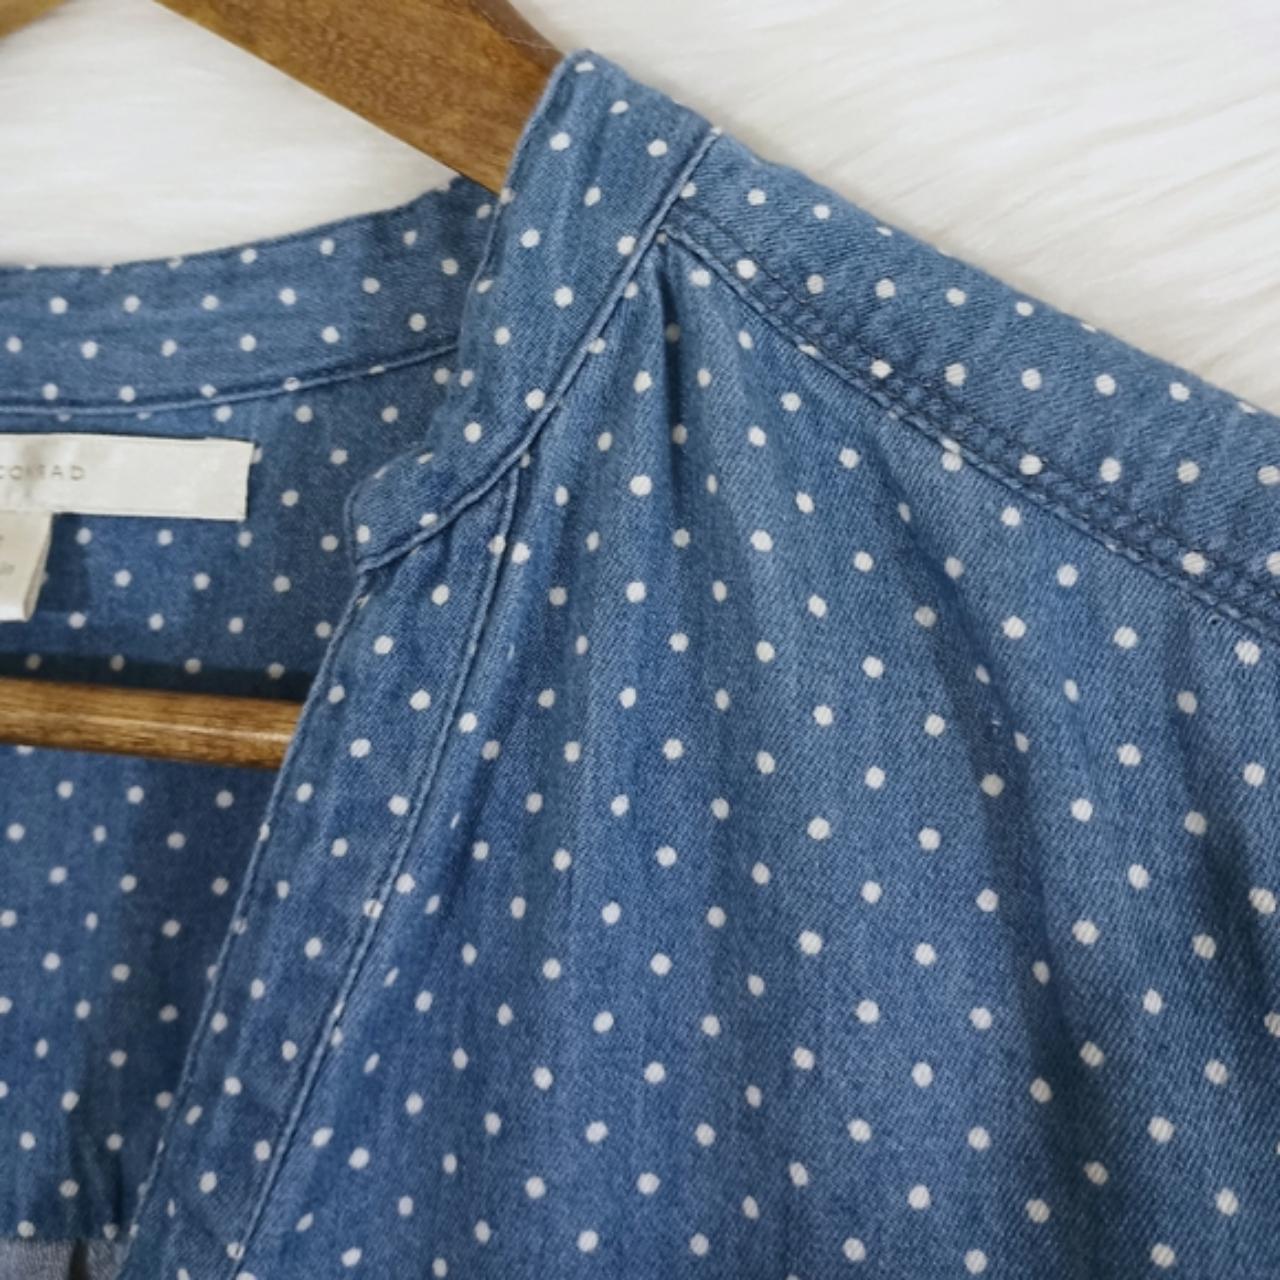 LC Lauren Conrad women's blue polkadot chambray button down shirt